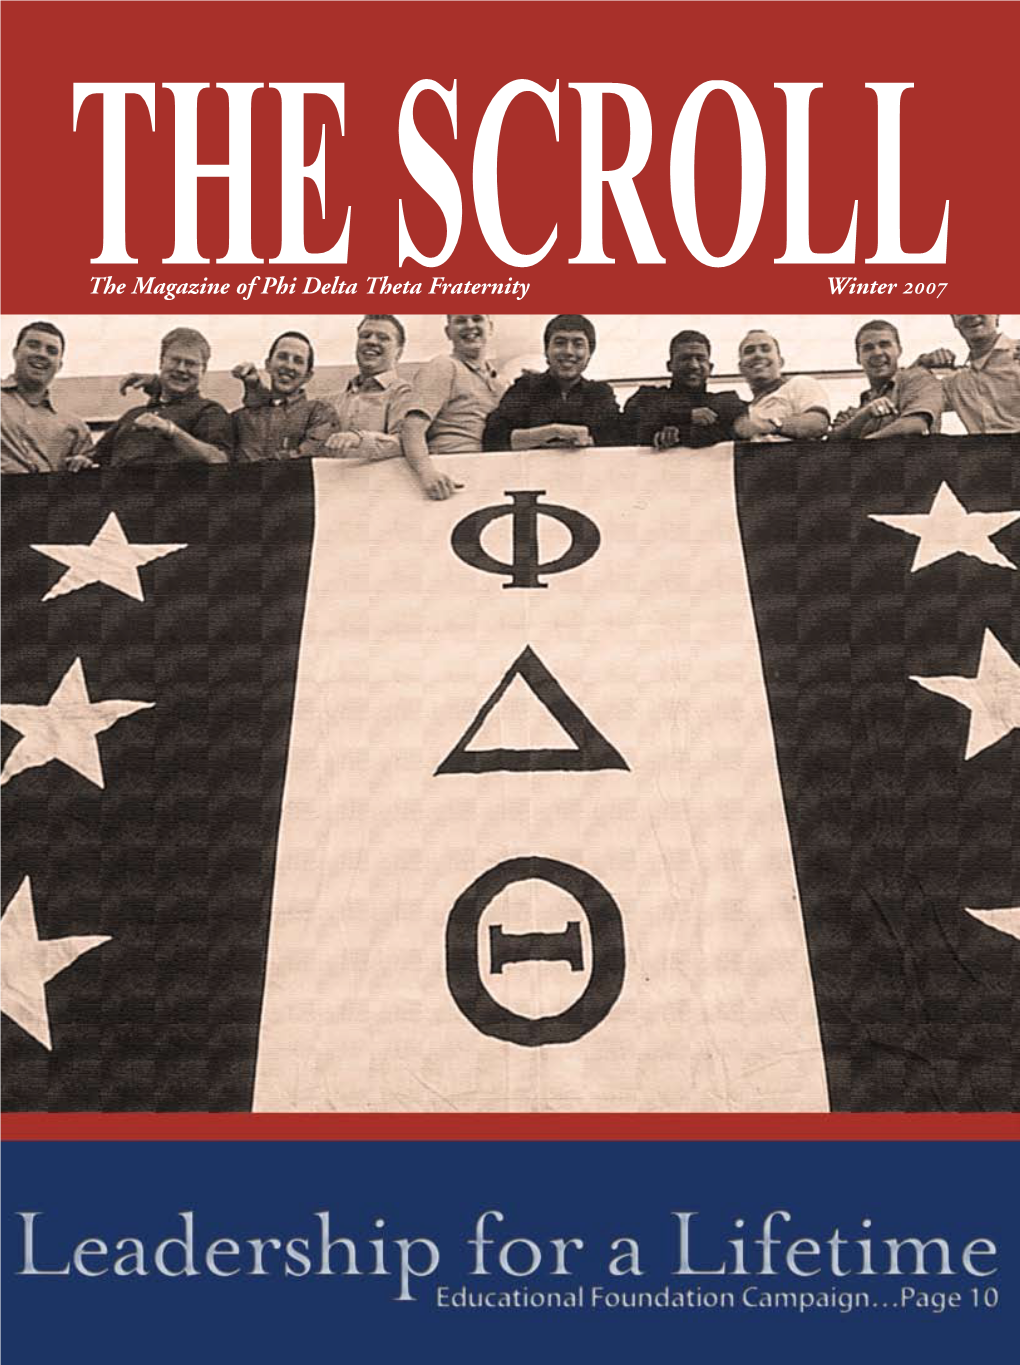 The Magazine of Phi Delta Theta Fraternity Winter 2007